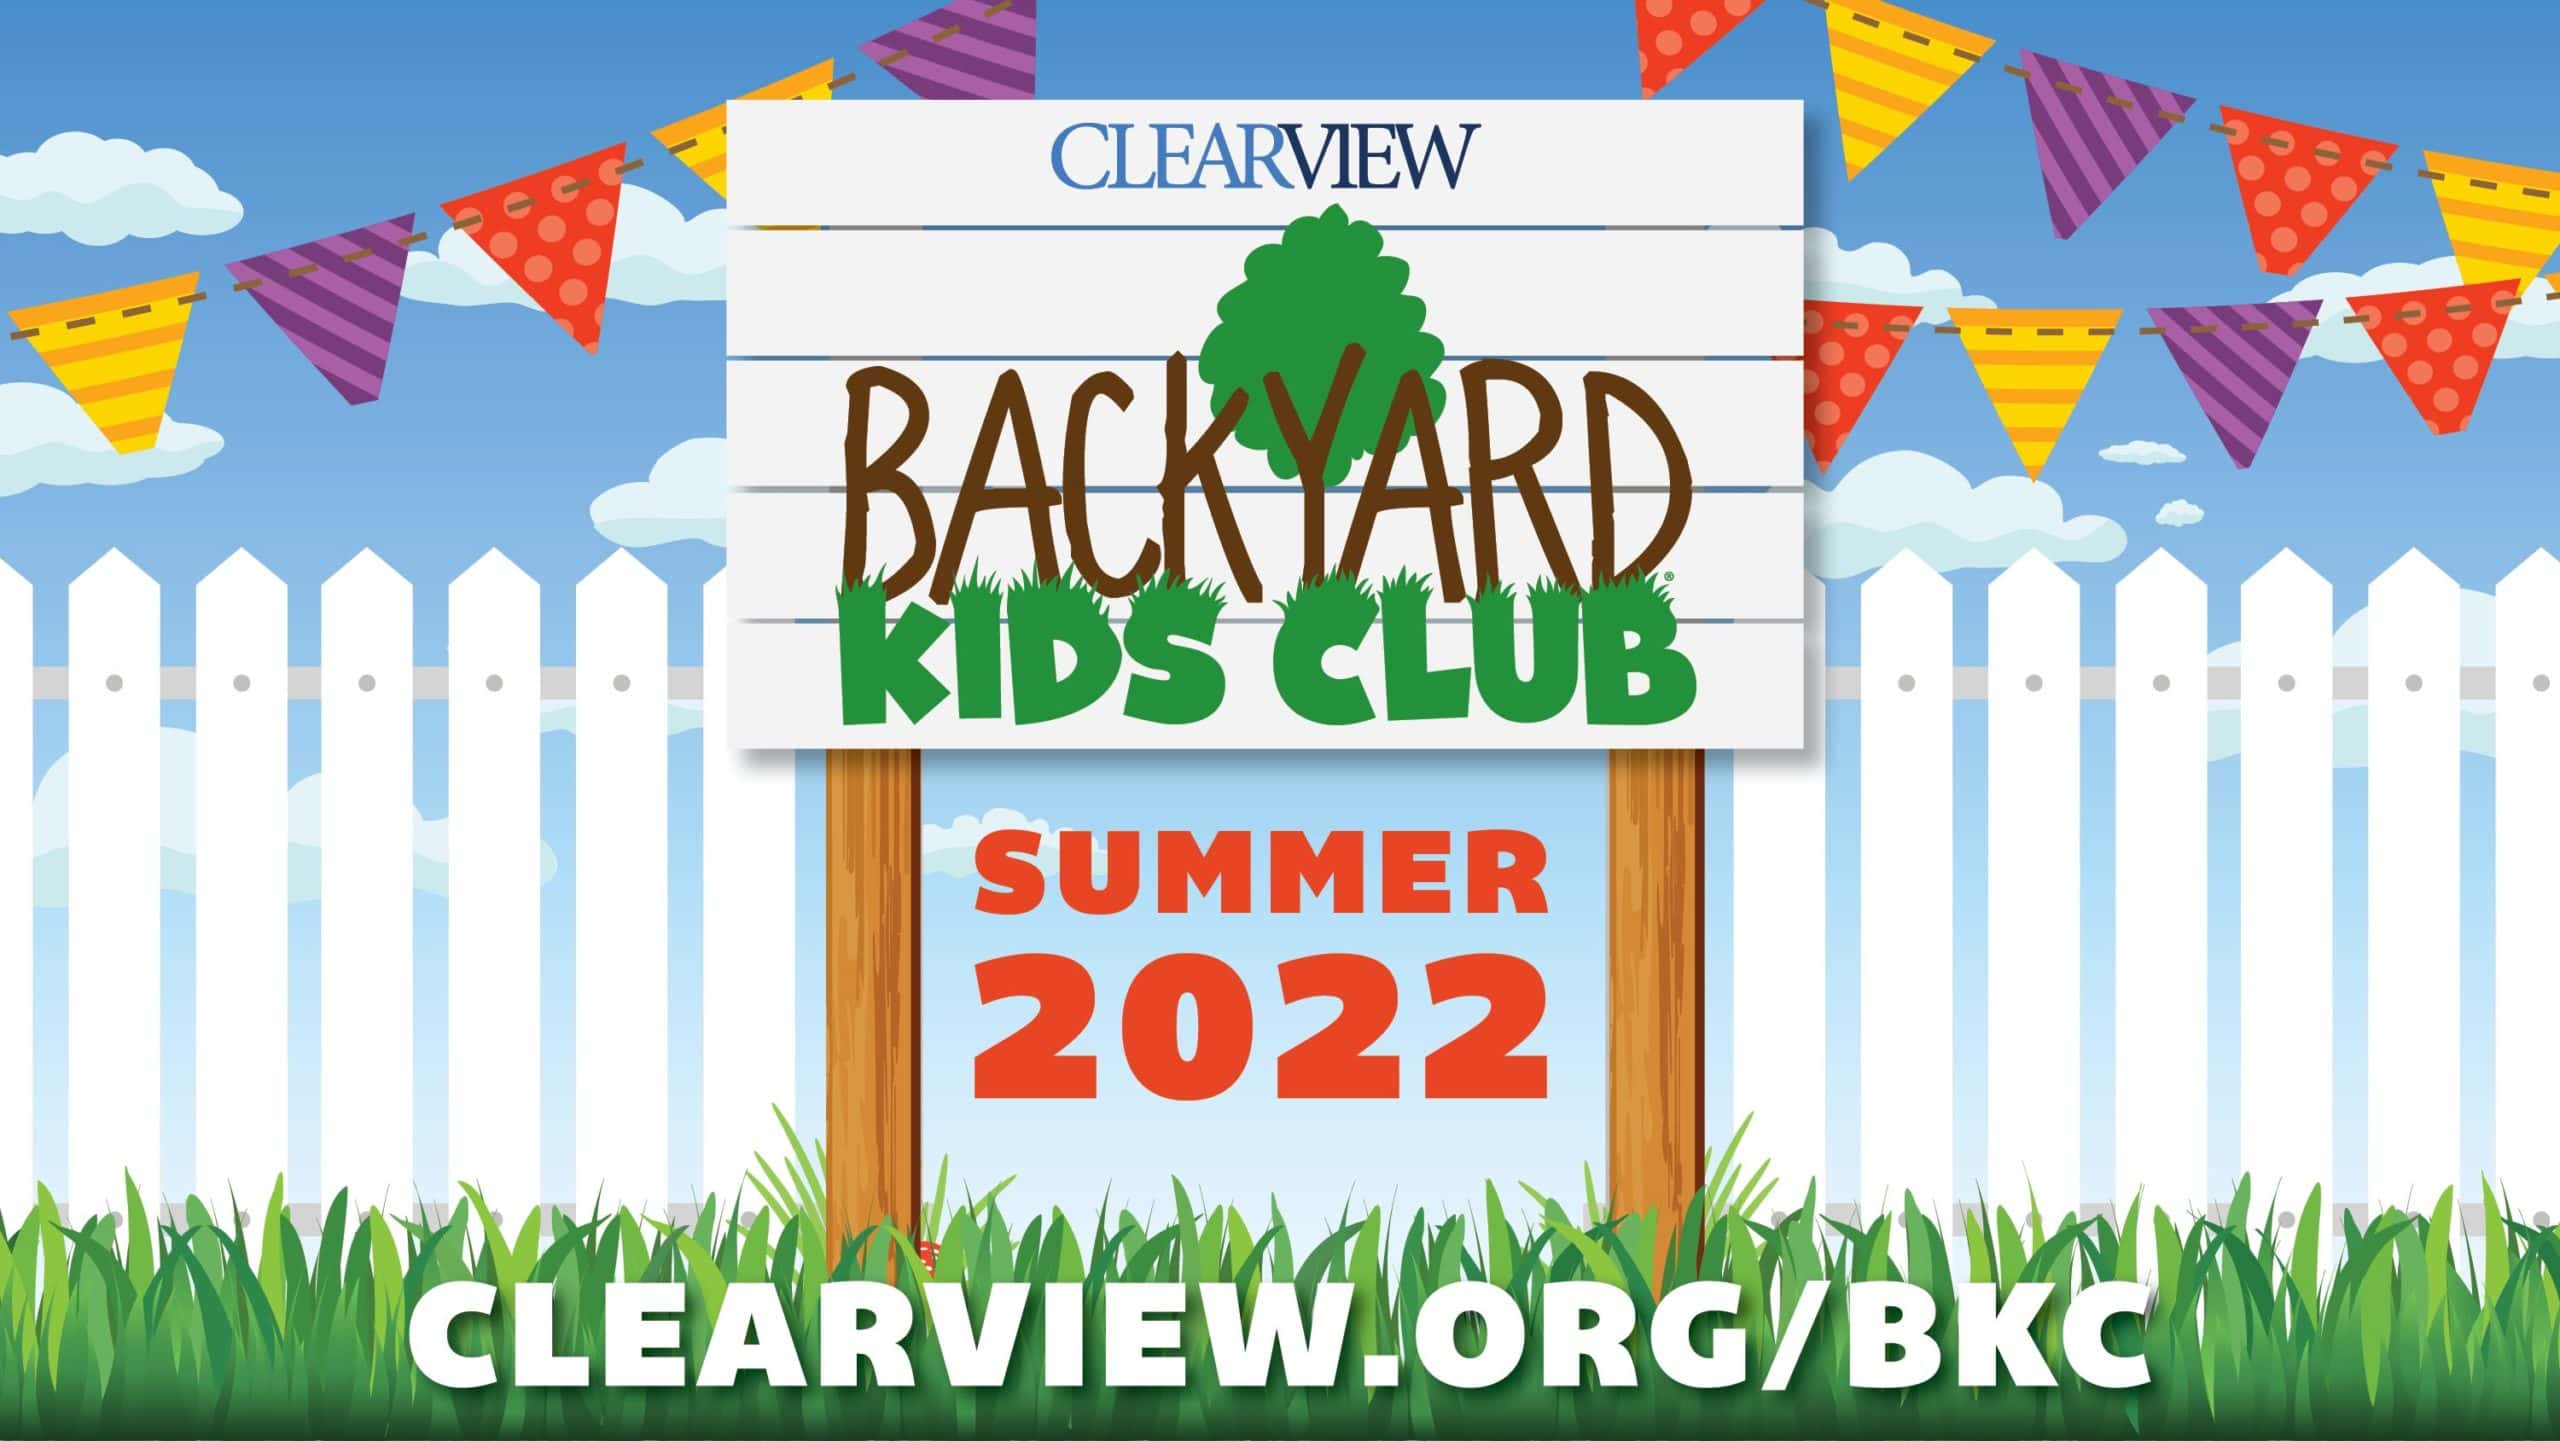 Backyard Kids Club summer 2022 event at ClearView Baptist Church